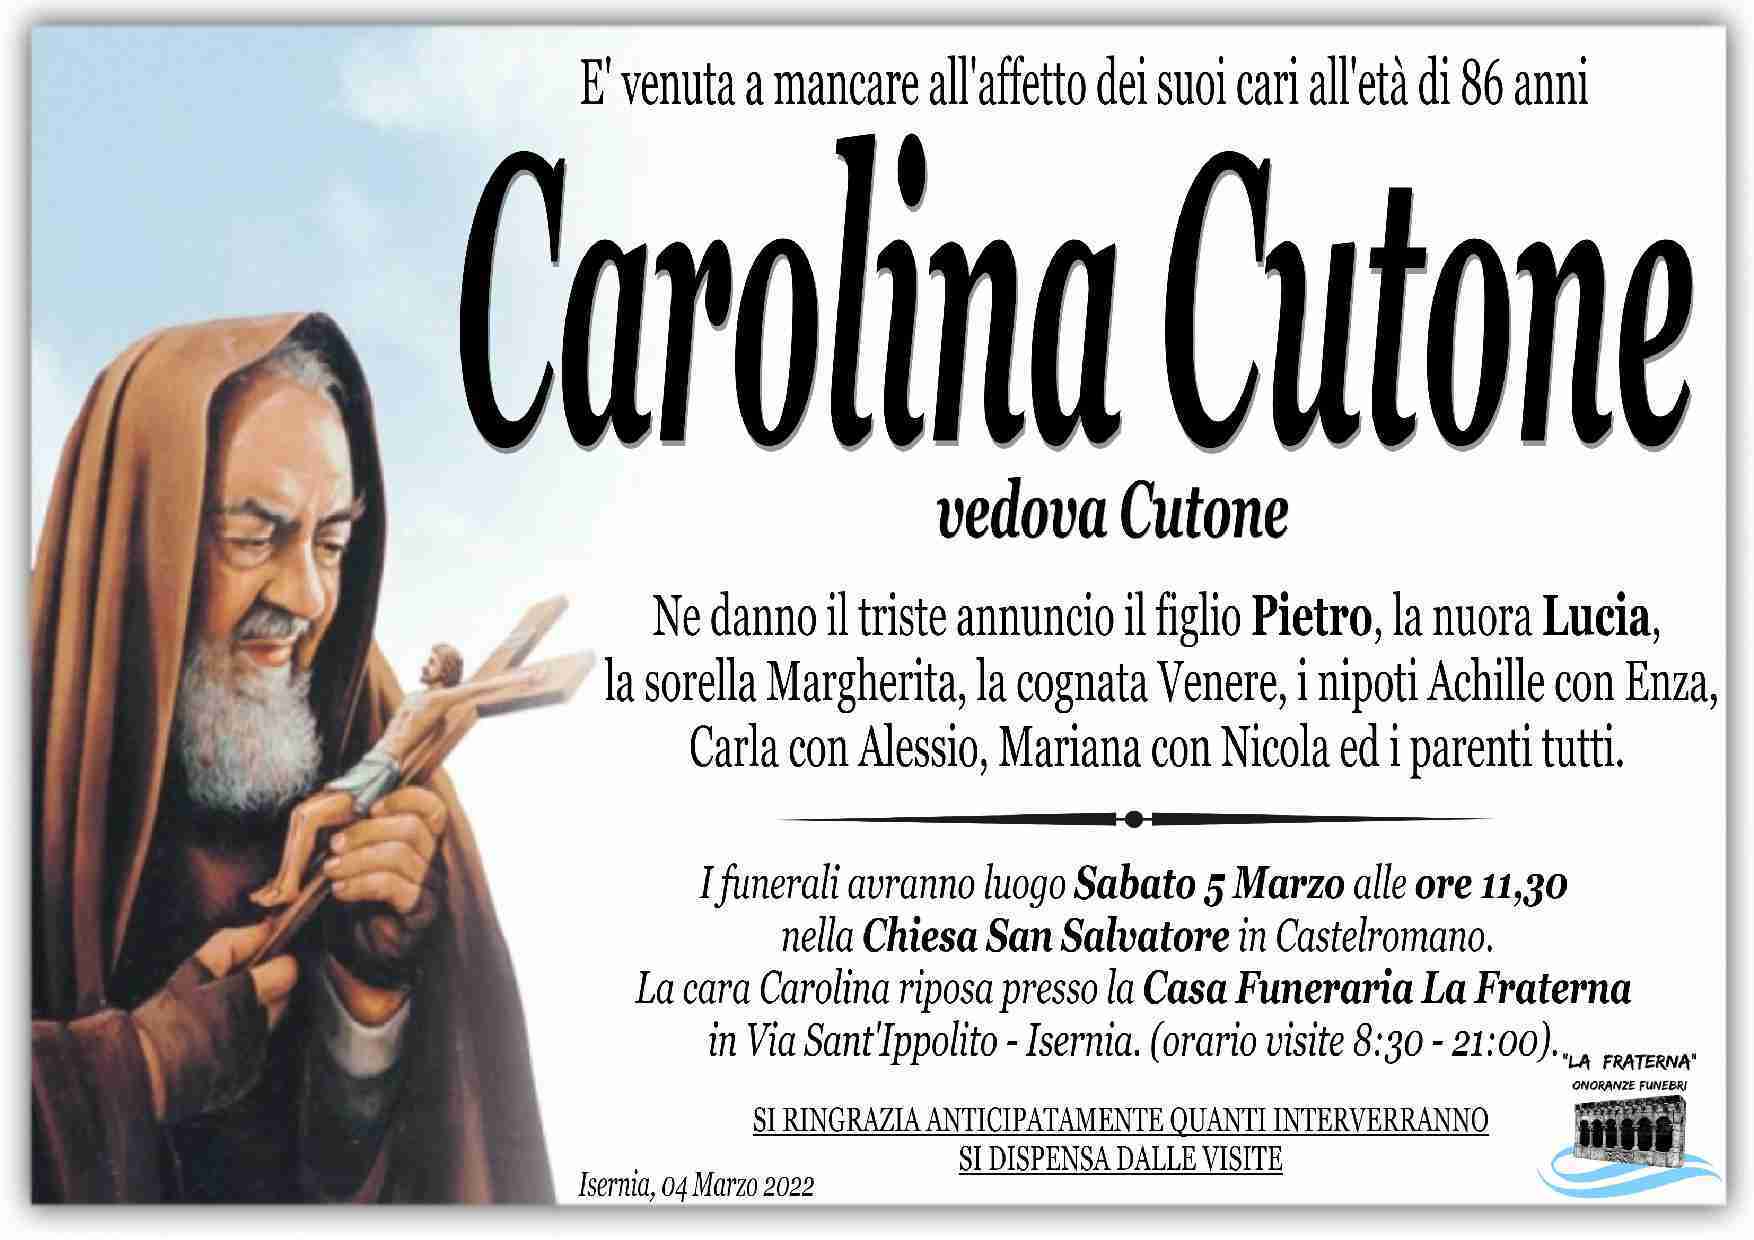 Carolina Cutone